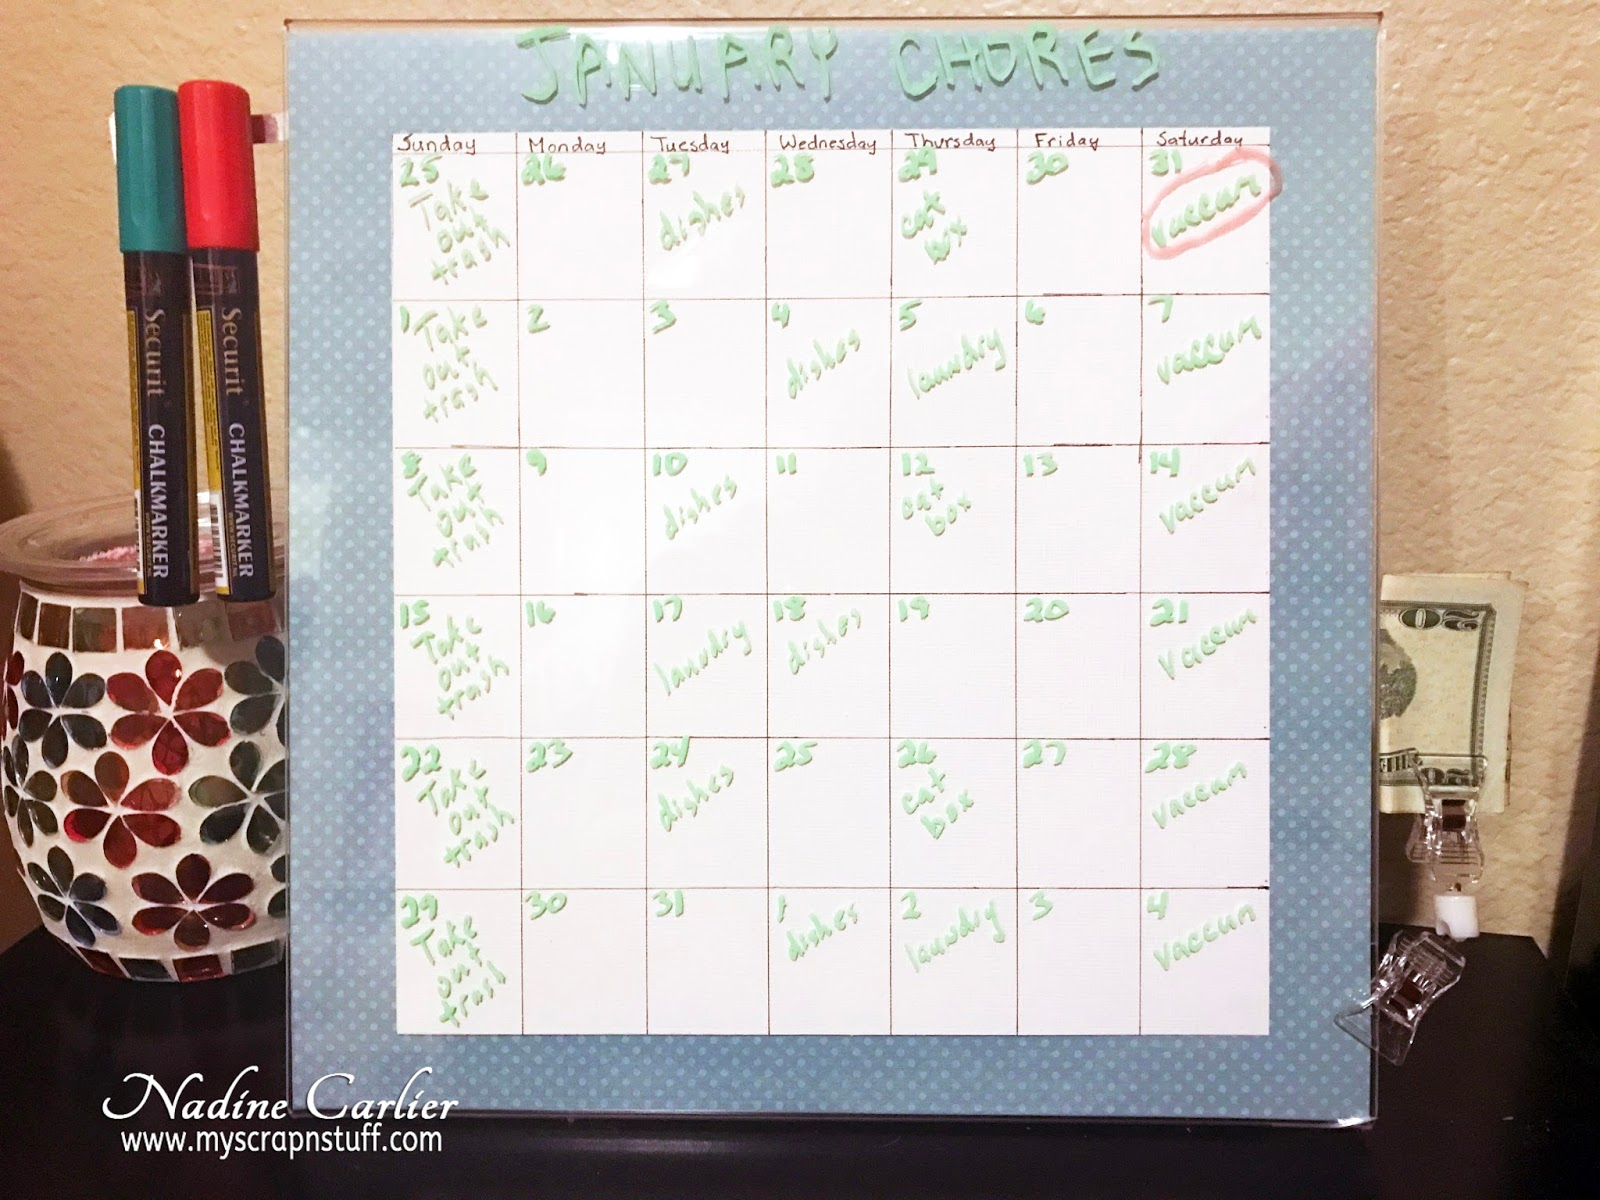 Nadine Carlier: Chore Calendar Solution inside 12X12 Calendar Holder